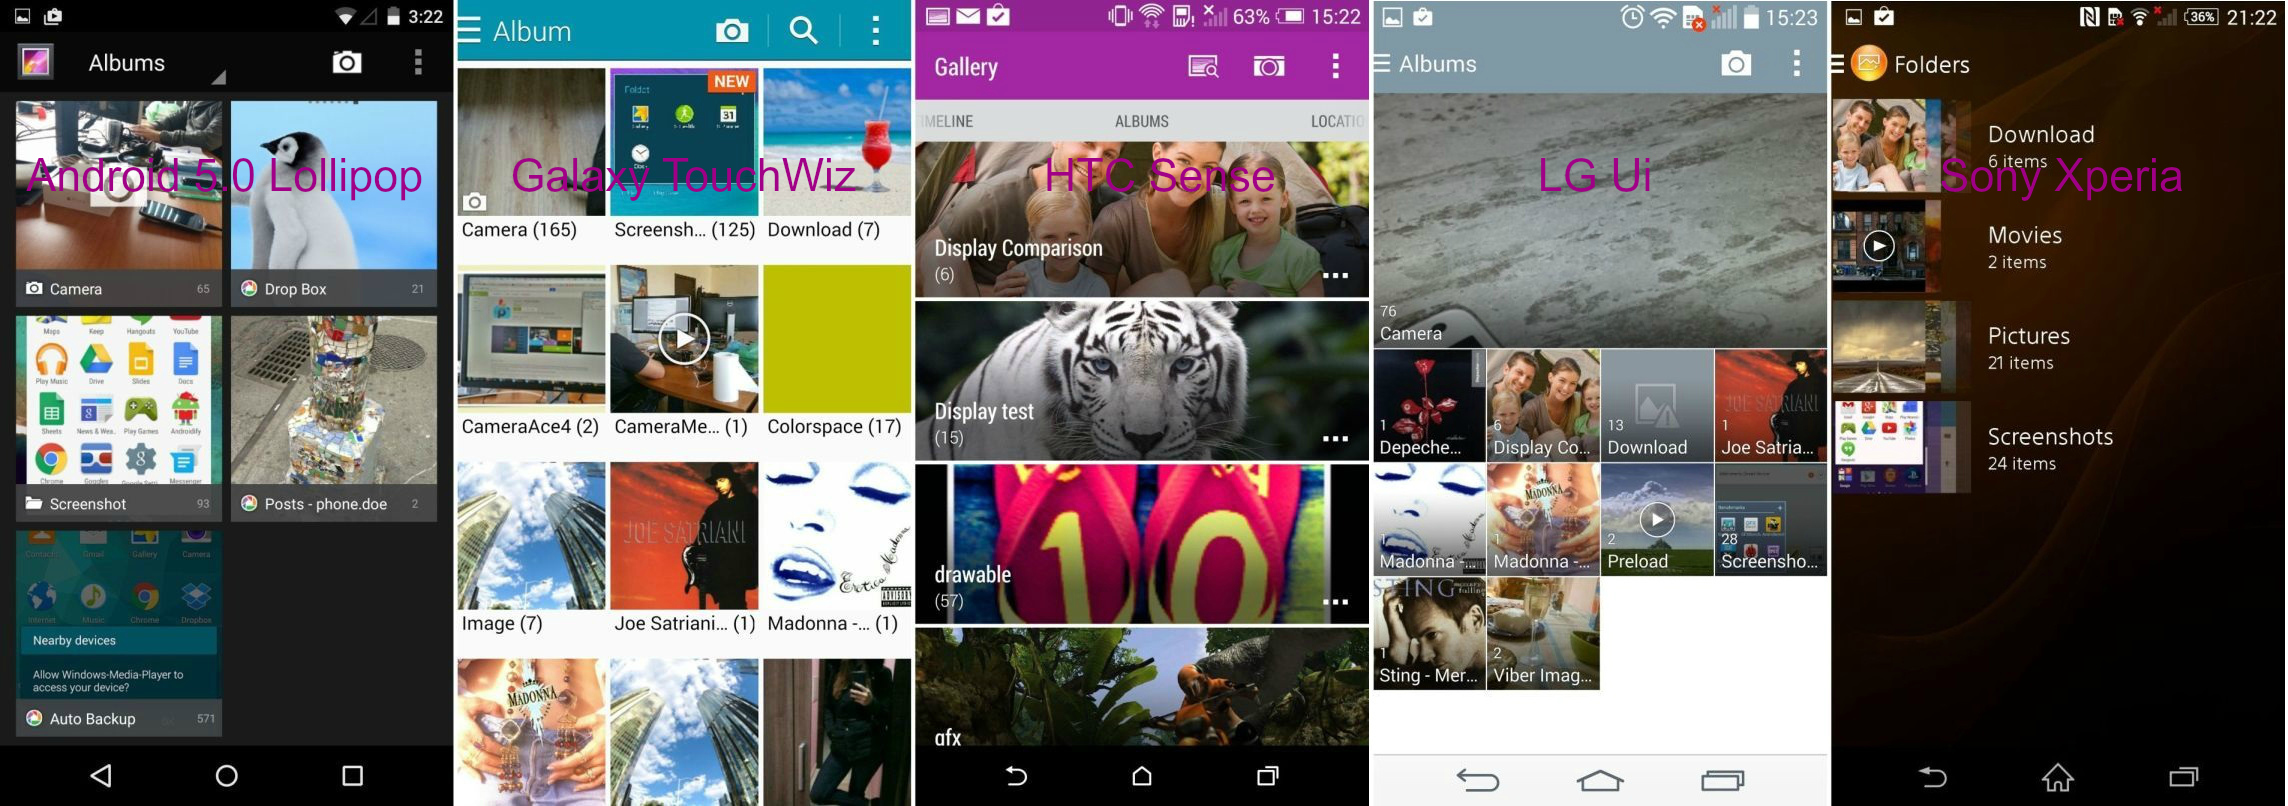 Galerie-Photo-Android-5.0-Lollipop-TouchWiz-Sense-LG-Sony-Xperia